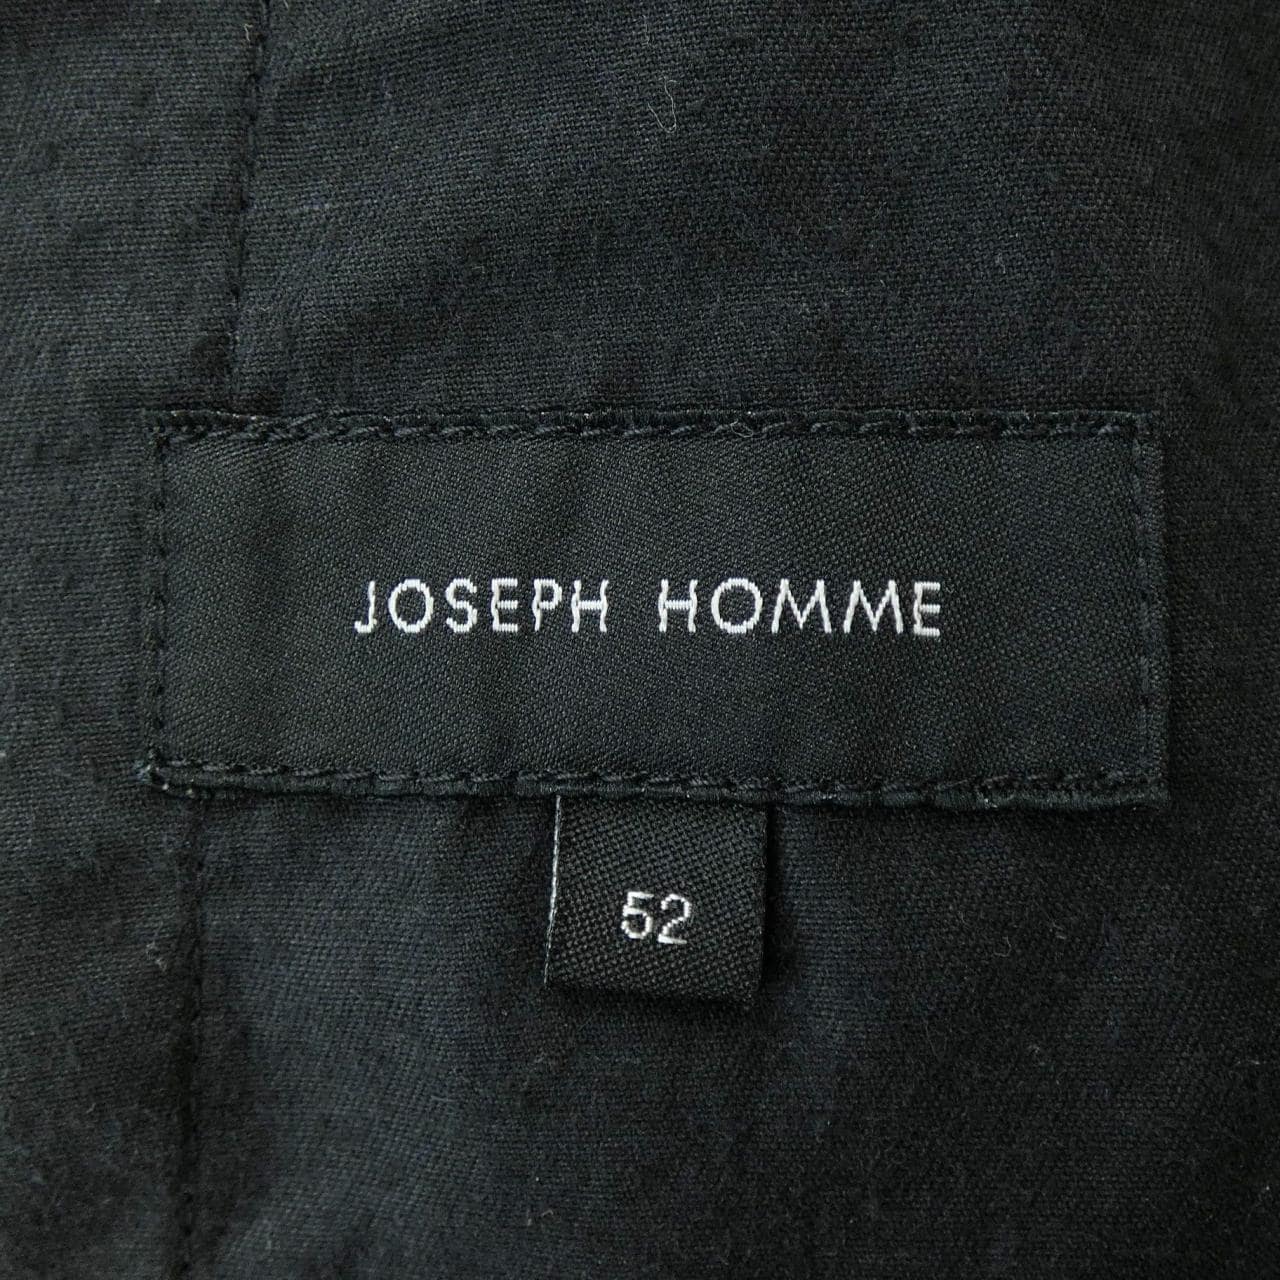 Joseph Homme JOSEPH HOMME pants